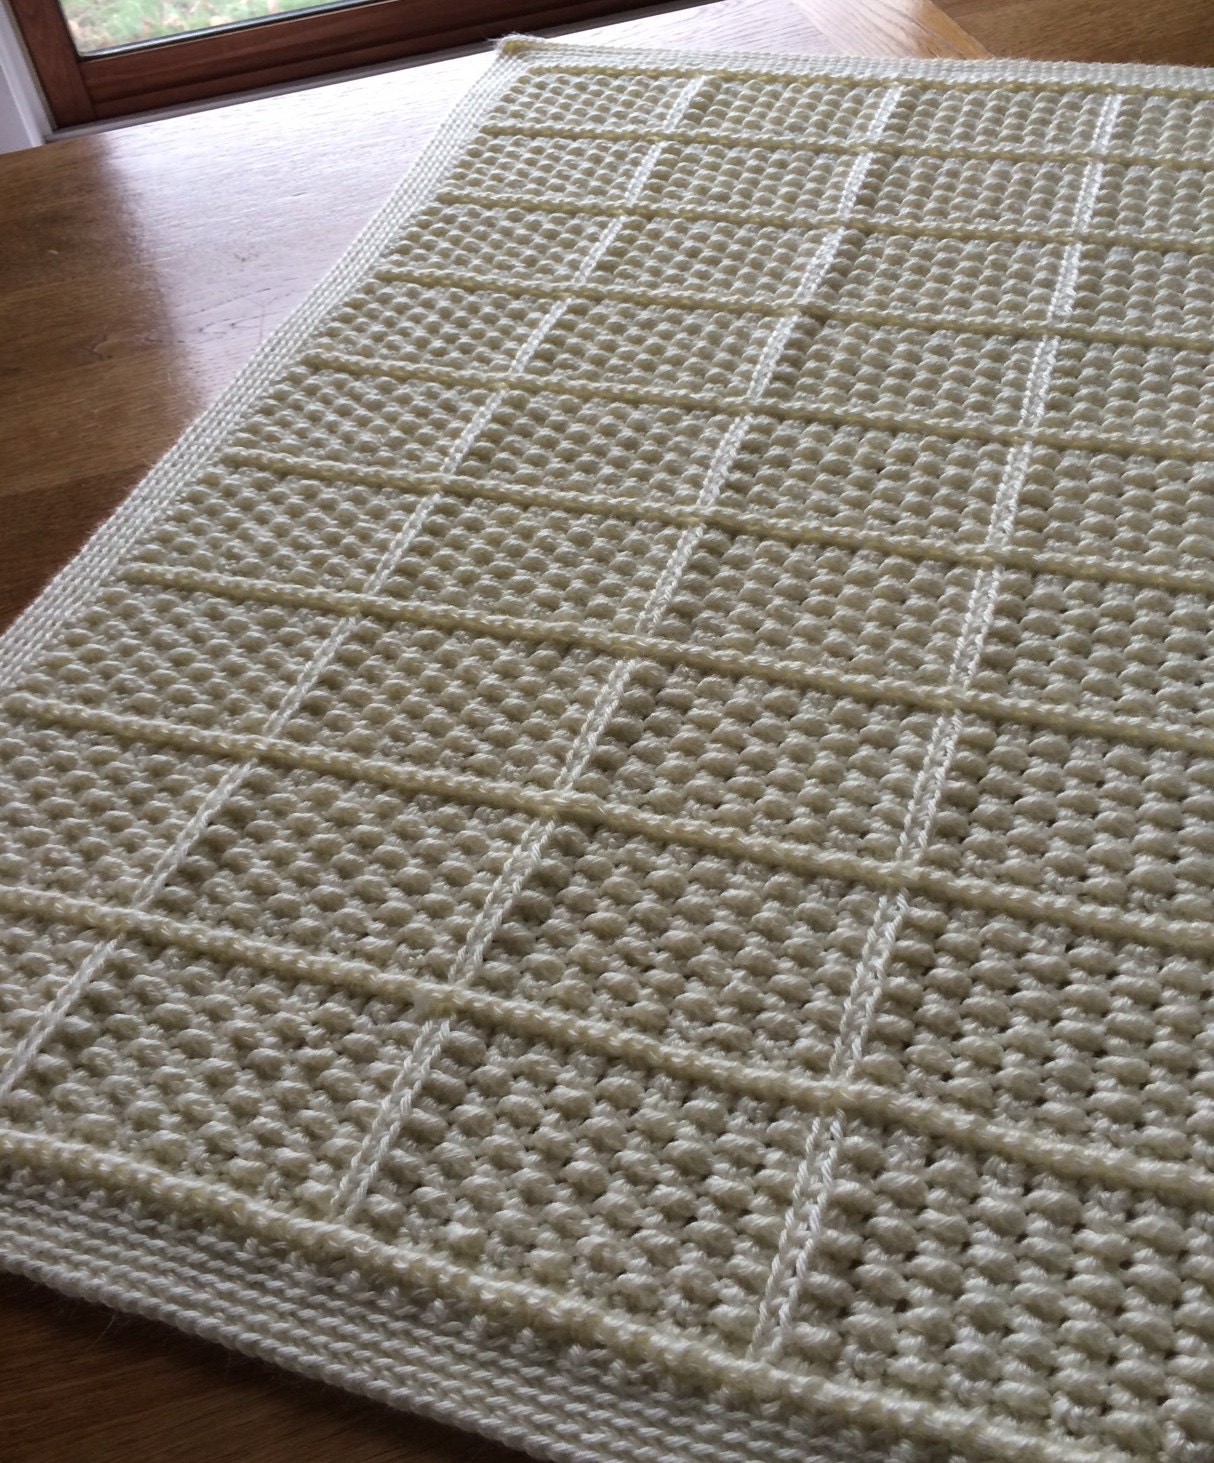 DOUBLE CHECKERBOARD Crochet Blanket Pattern / Instant Download